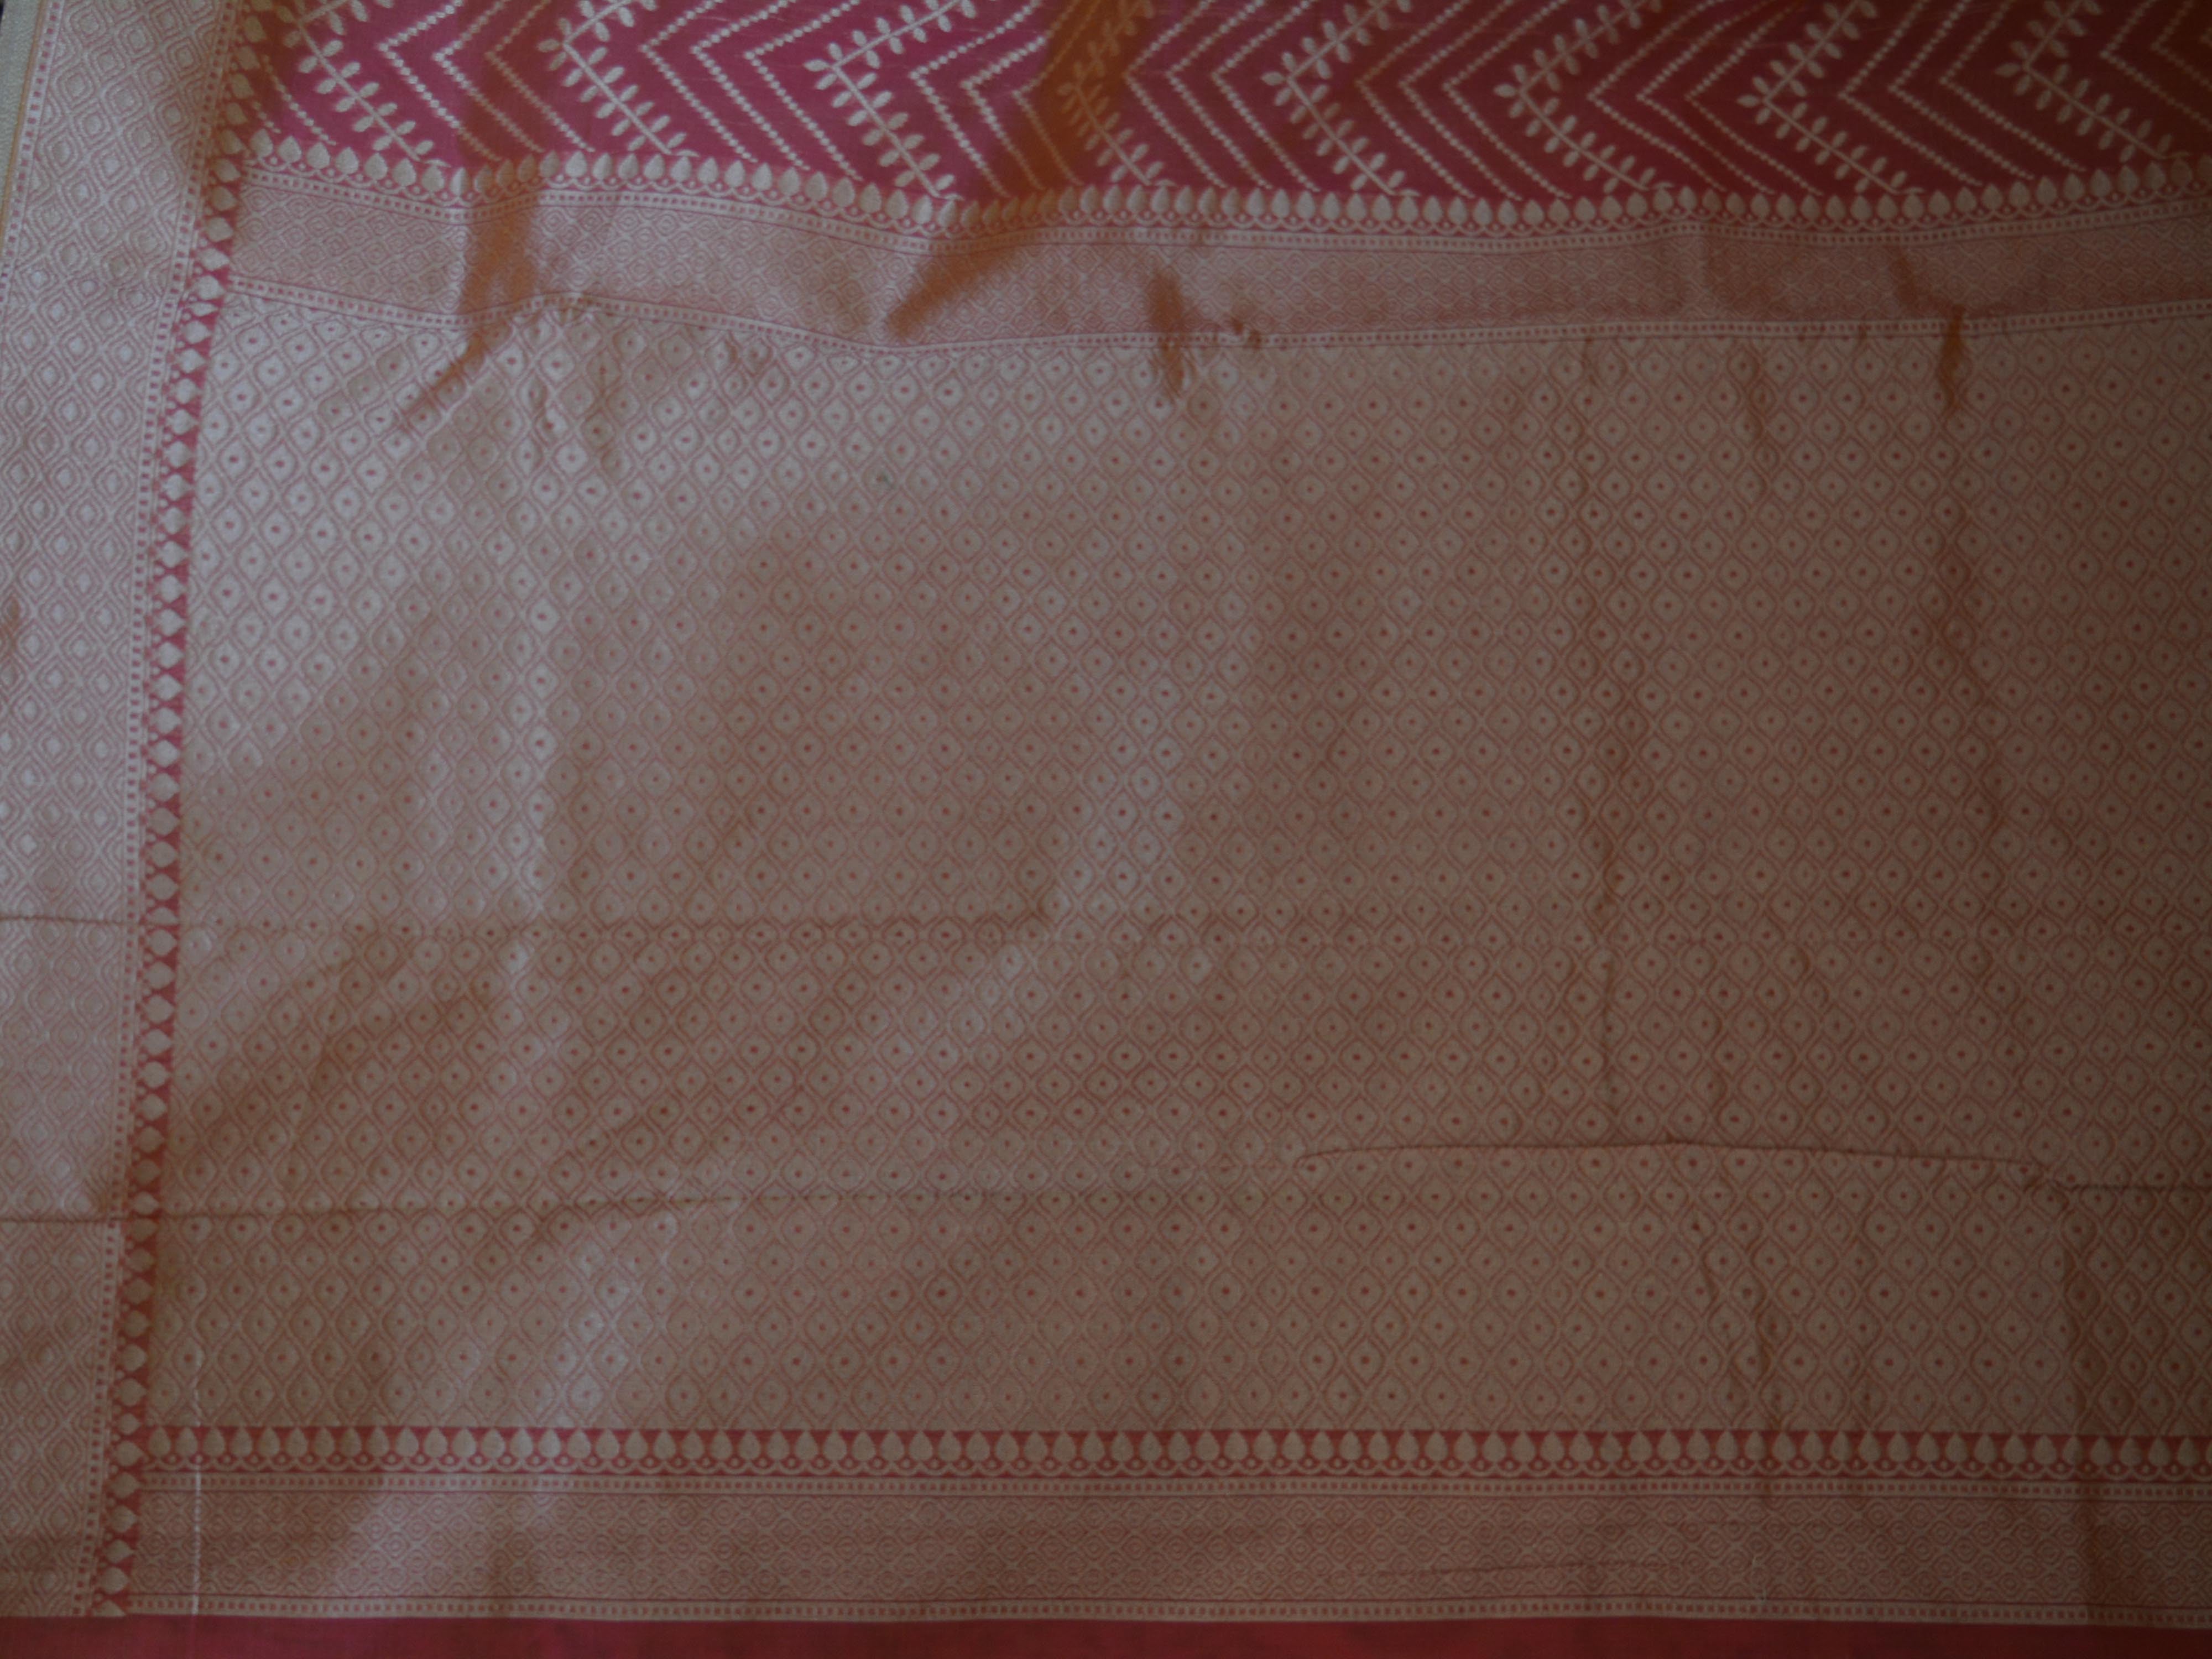 Banarasee/Banarasi  Handloom Cotton Silk Dual Tone Sari With Zari Weaving-Peach